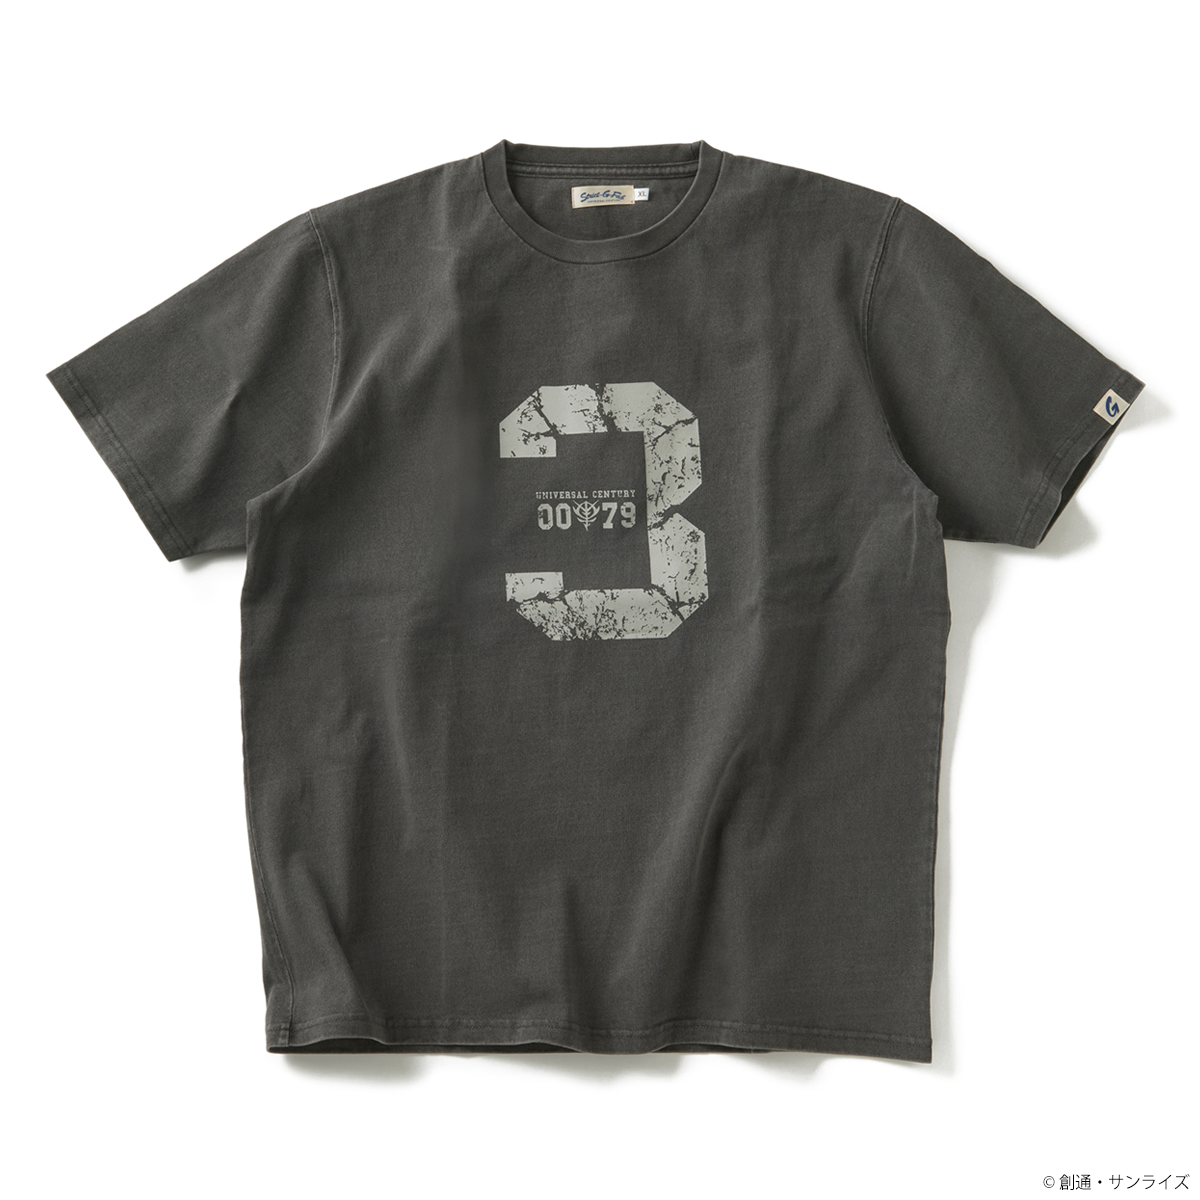 STRICT-G.Fab『機動戦士ガンダム』半袖Tシャツ 黒い三連星